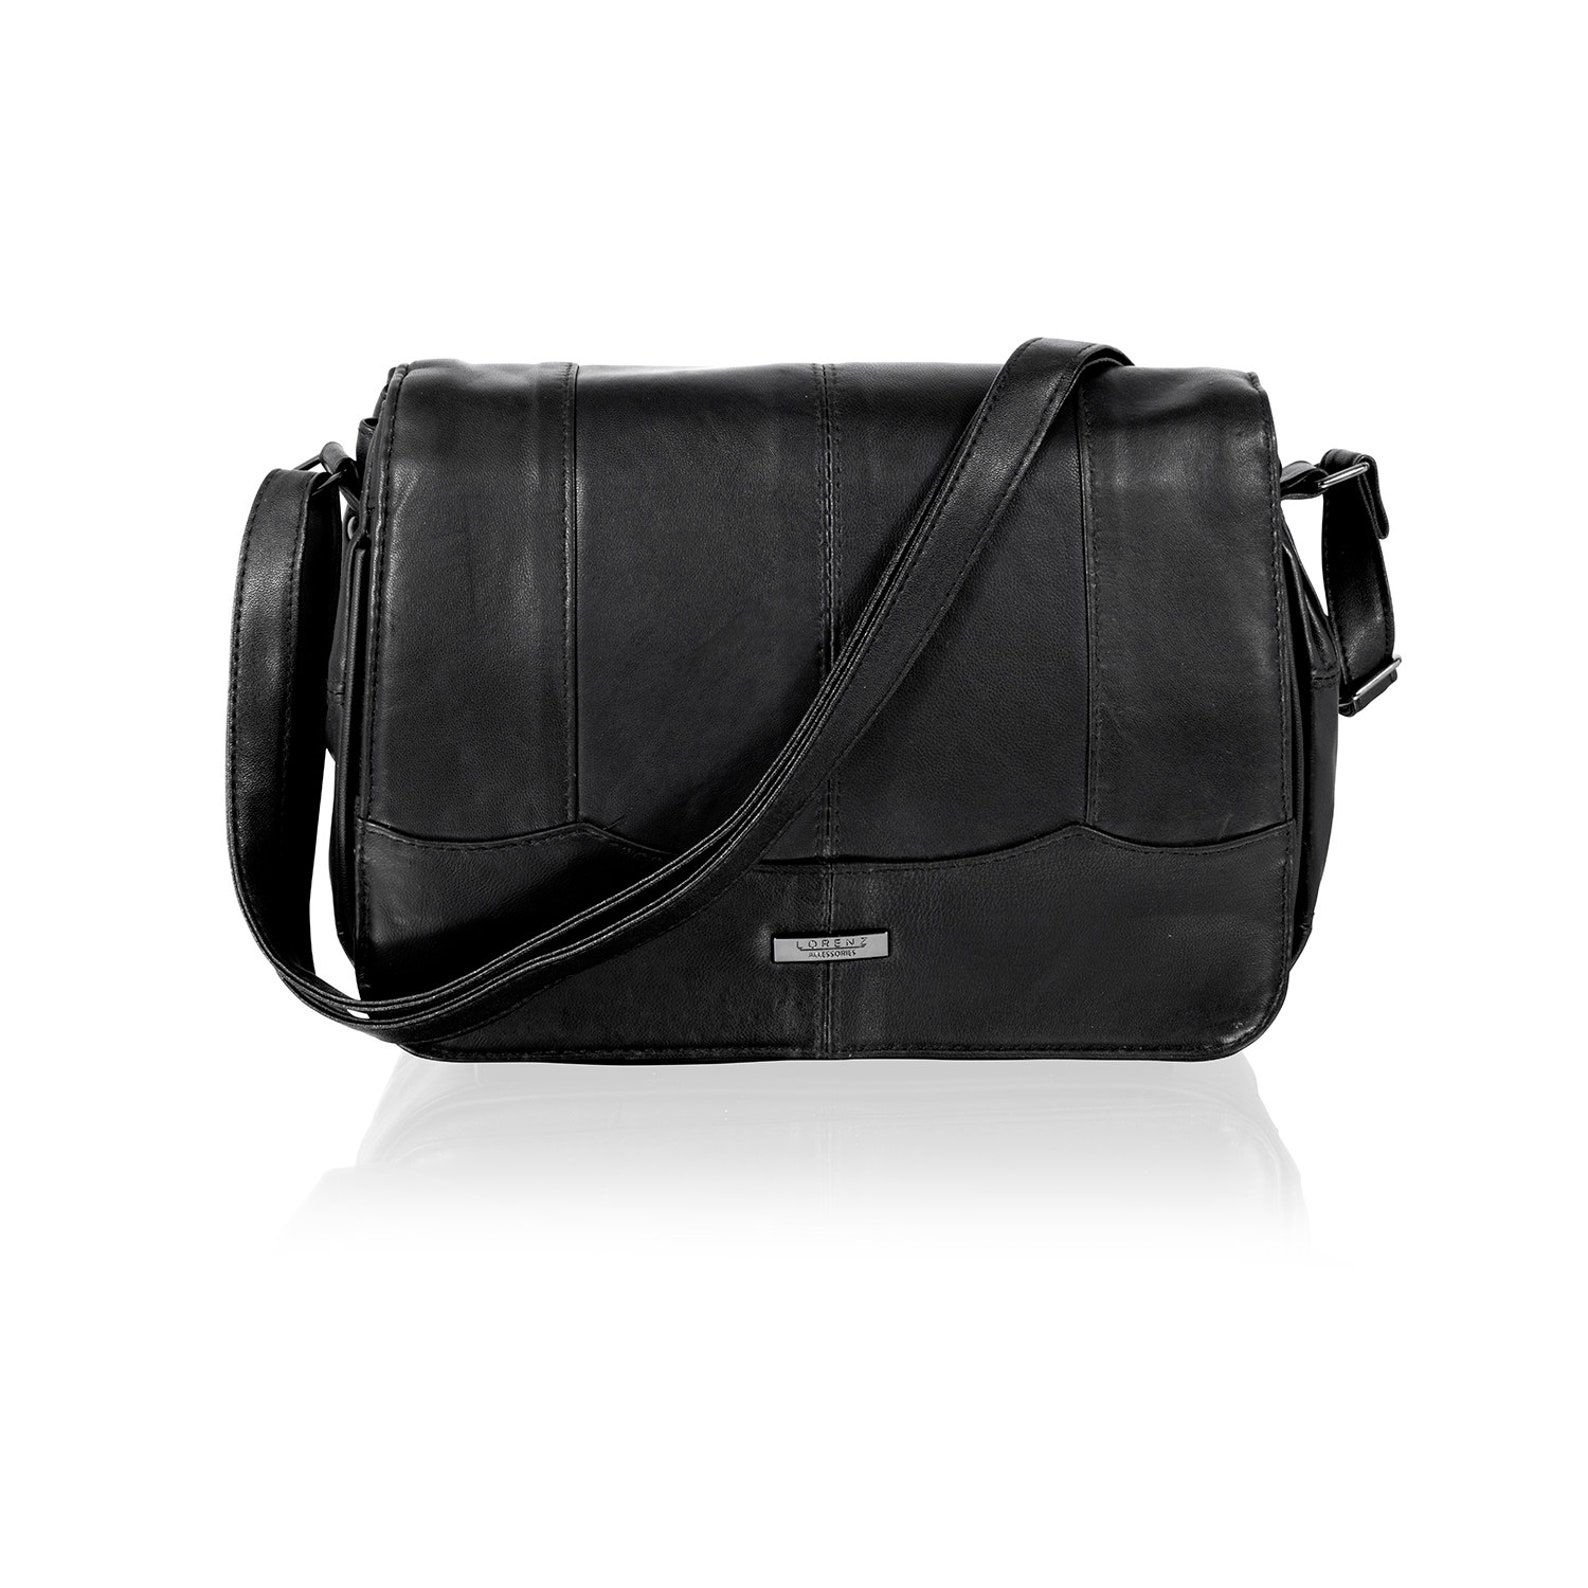 Woodland Leather Black Leather Hand Bag 10.0 with Adjustable | Etsy